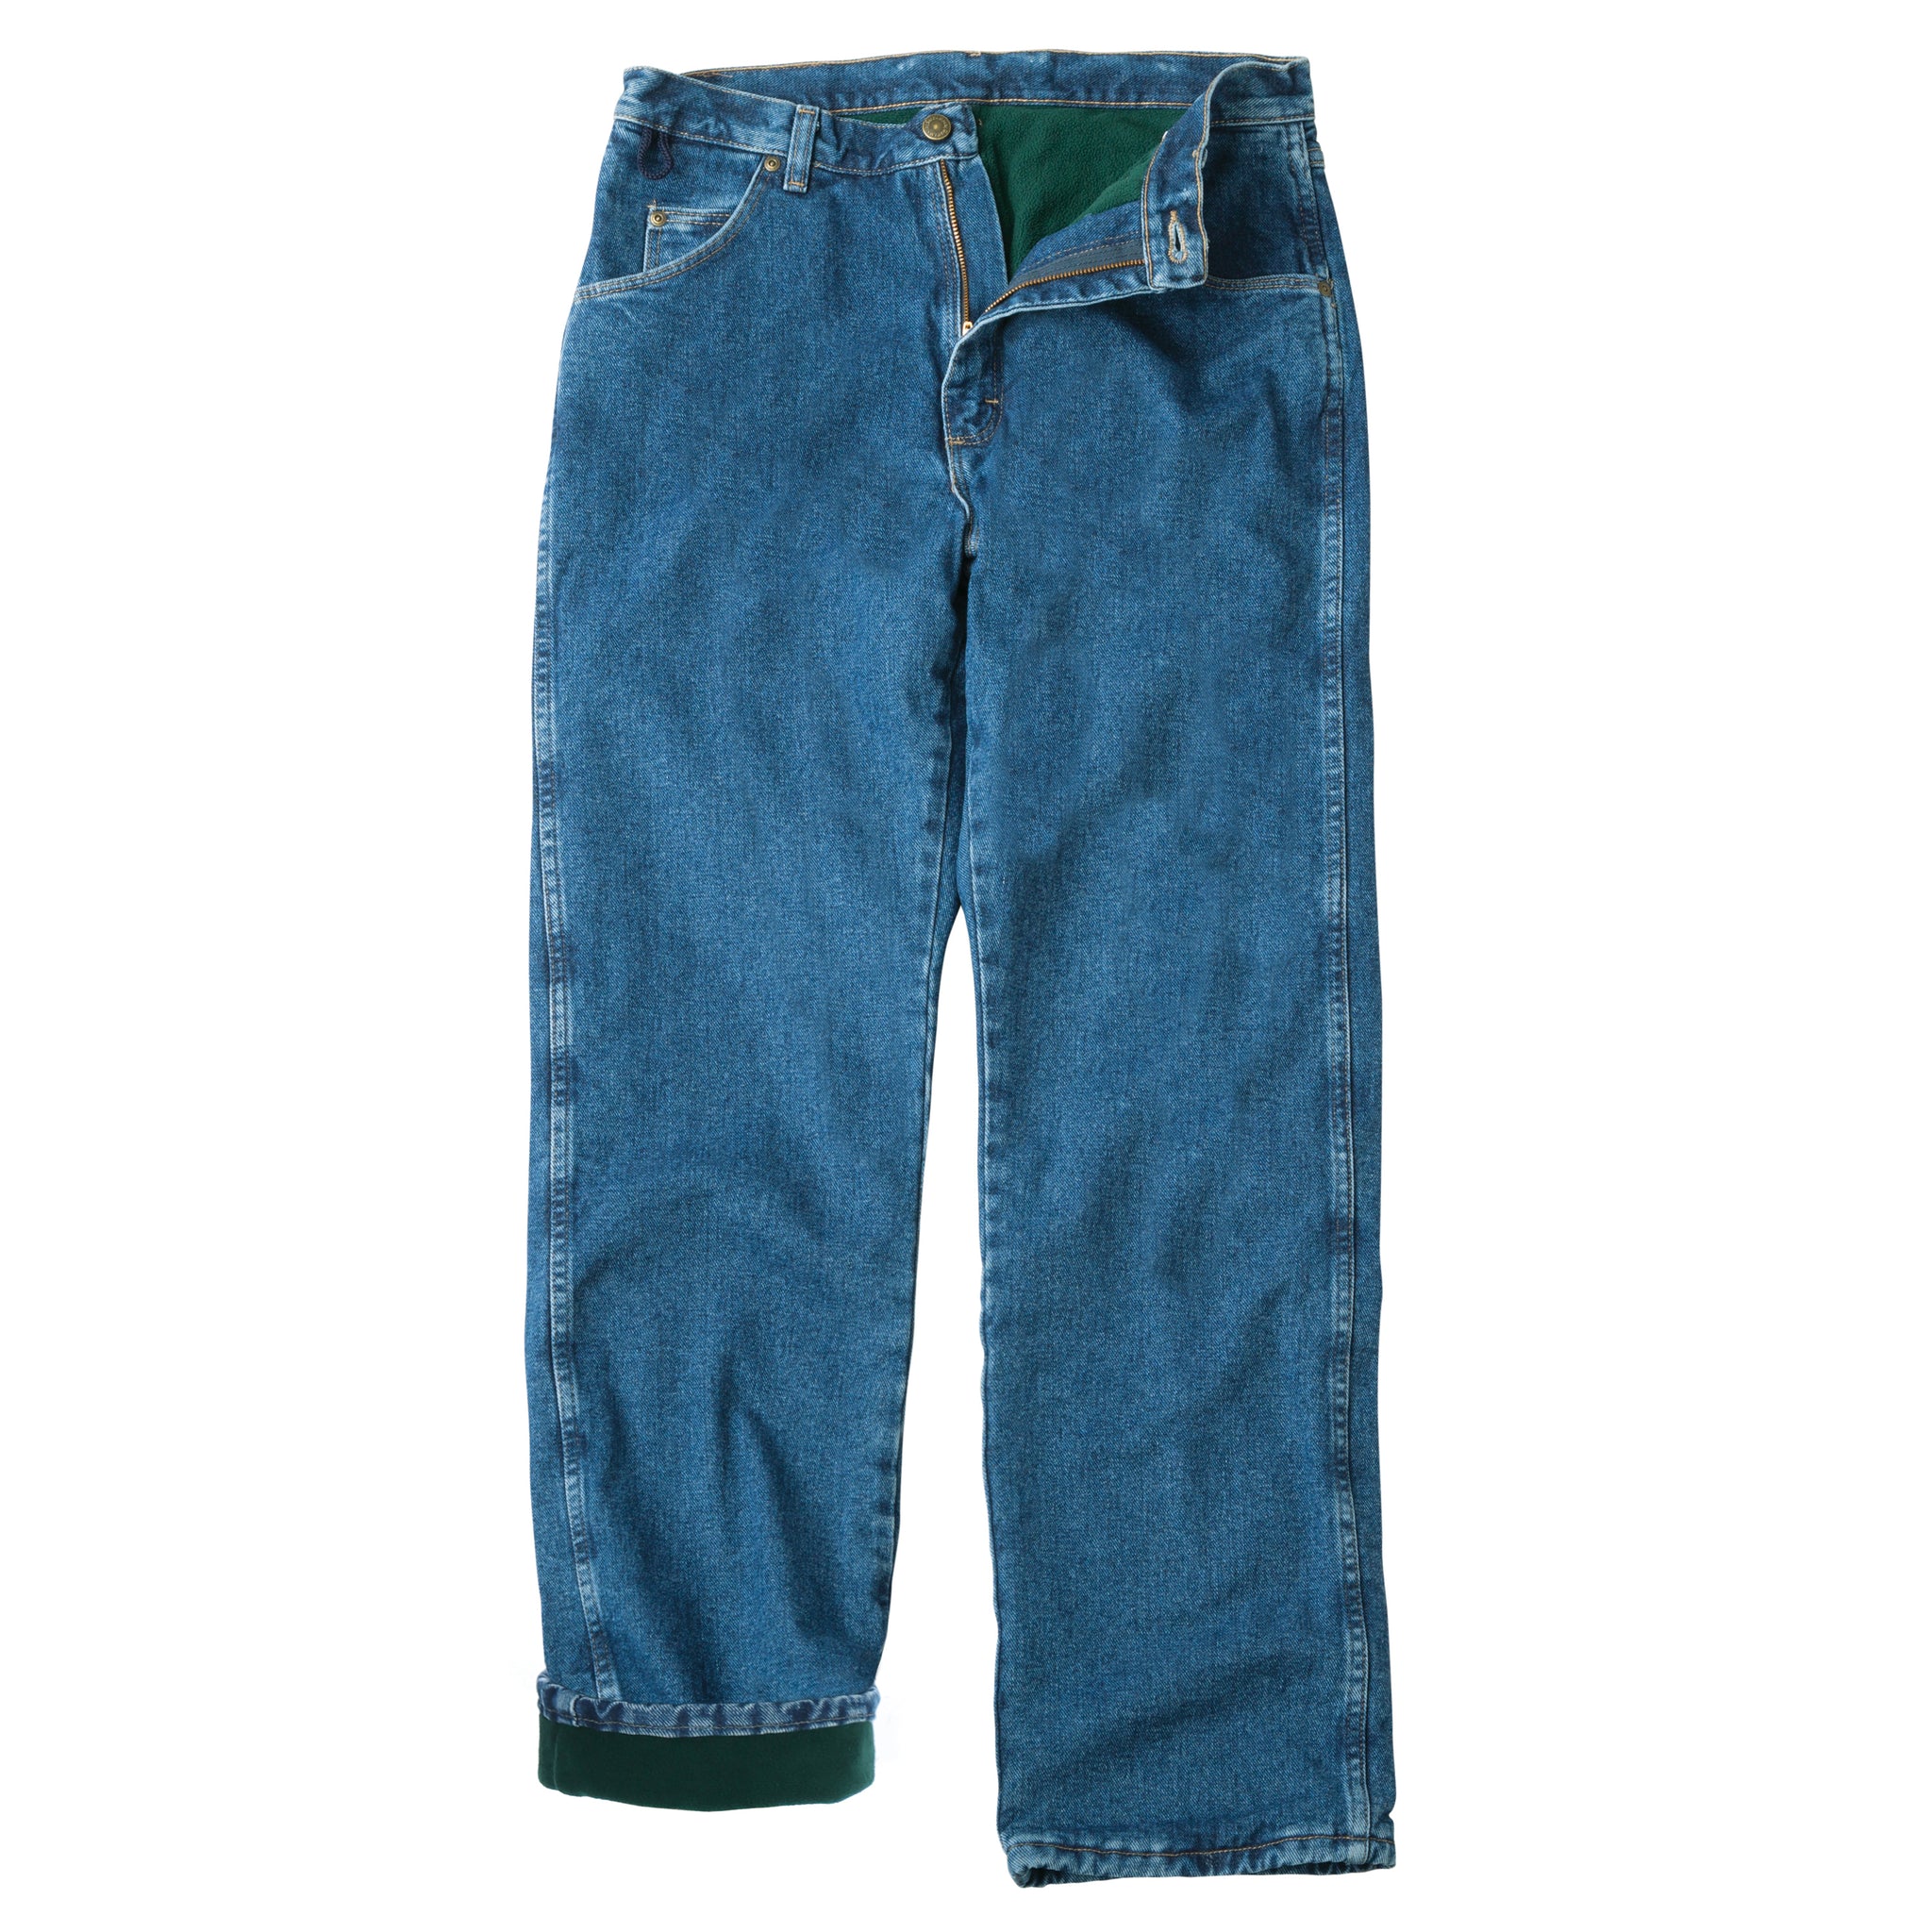 Wrangler Men's Rugged Wear Fleeced Lined Jeans 35002 – Good's Store Online